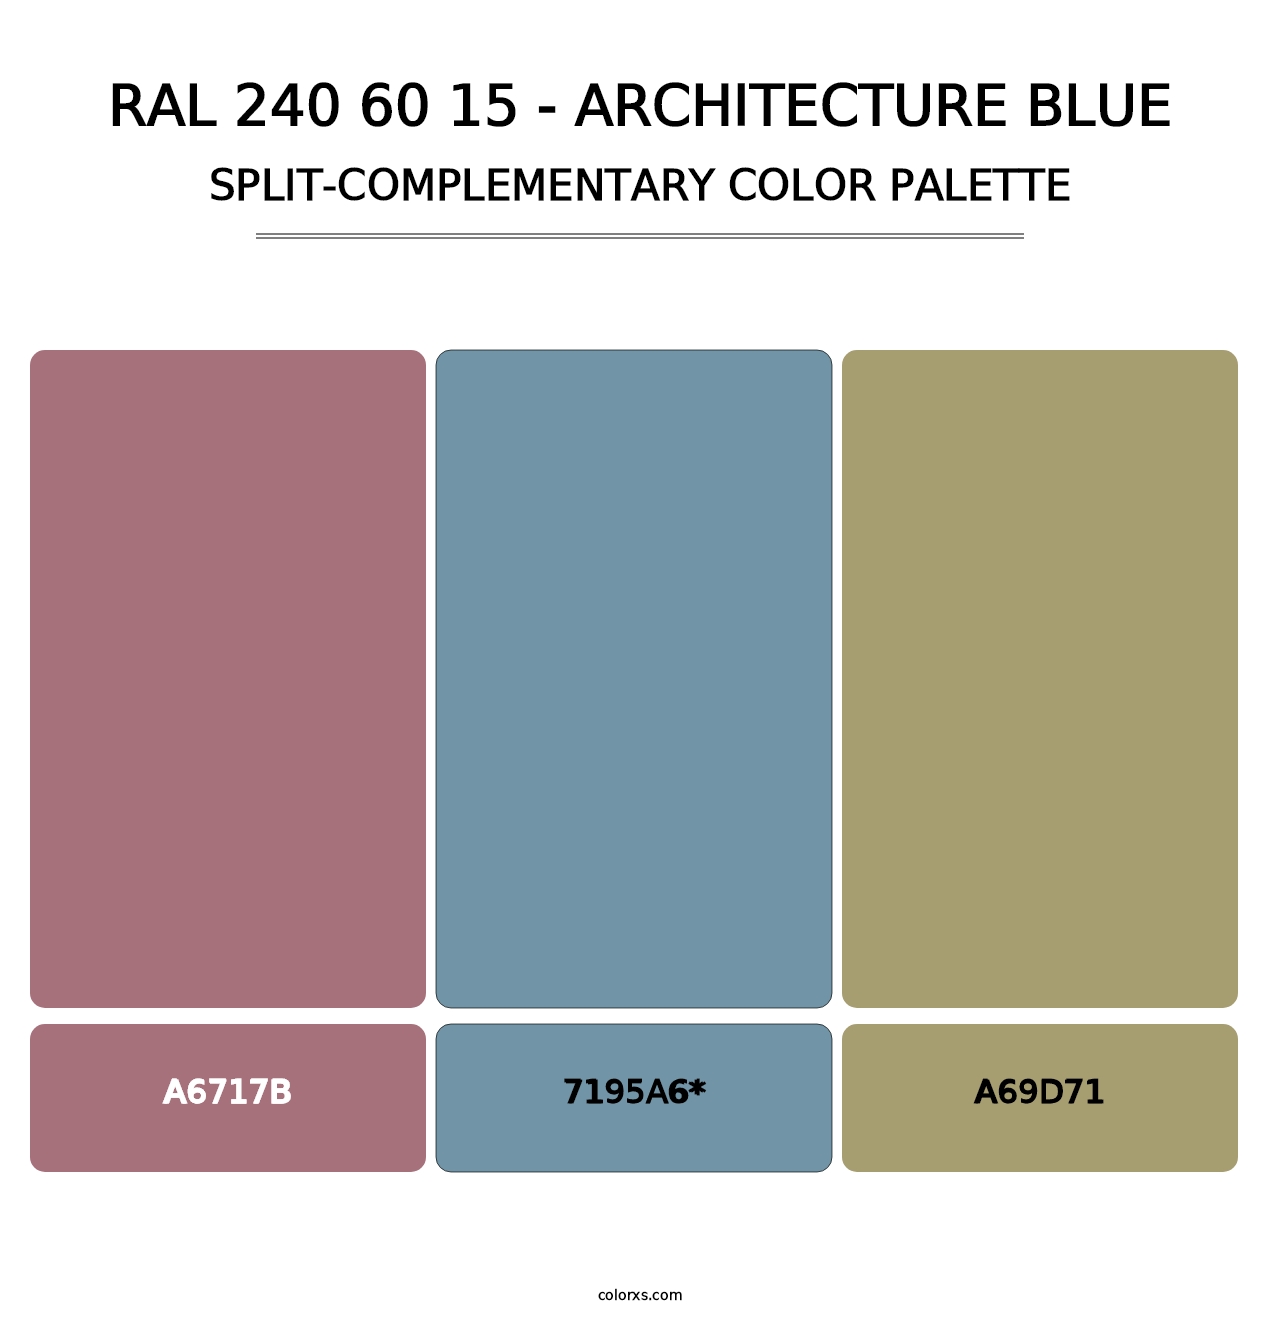 RAL 240 60 15 - Architecture Blue - Split-Complementary Color Palette